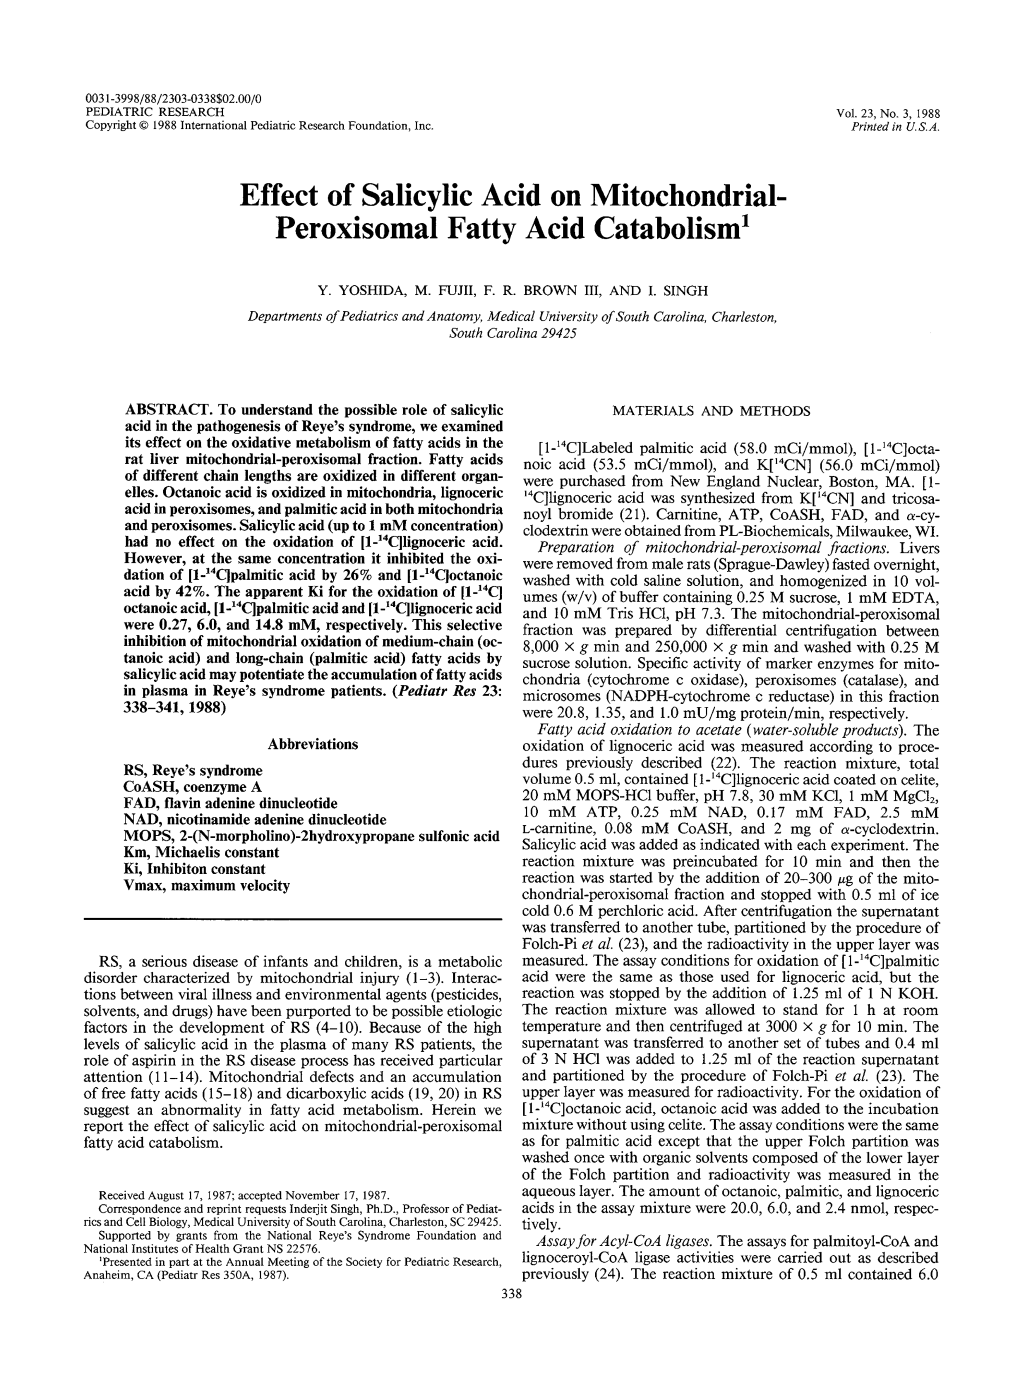 Effect of Salicylic Acid on Mitochondrial- Peroxisomal Fatty Acid Catabolism1